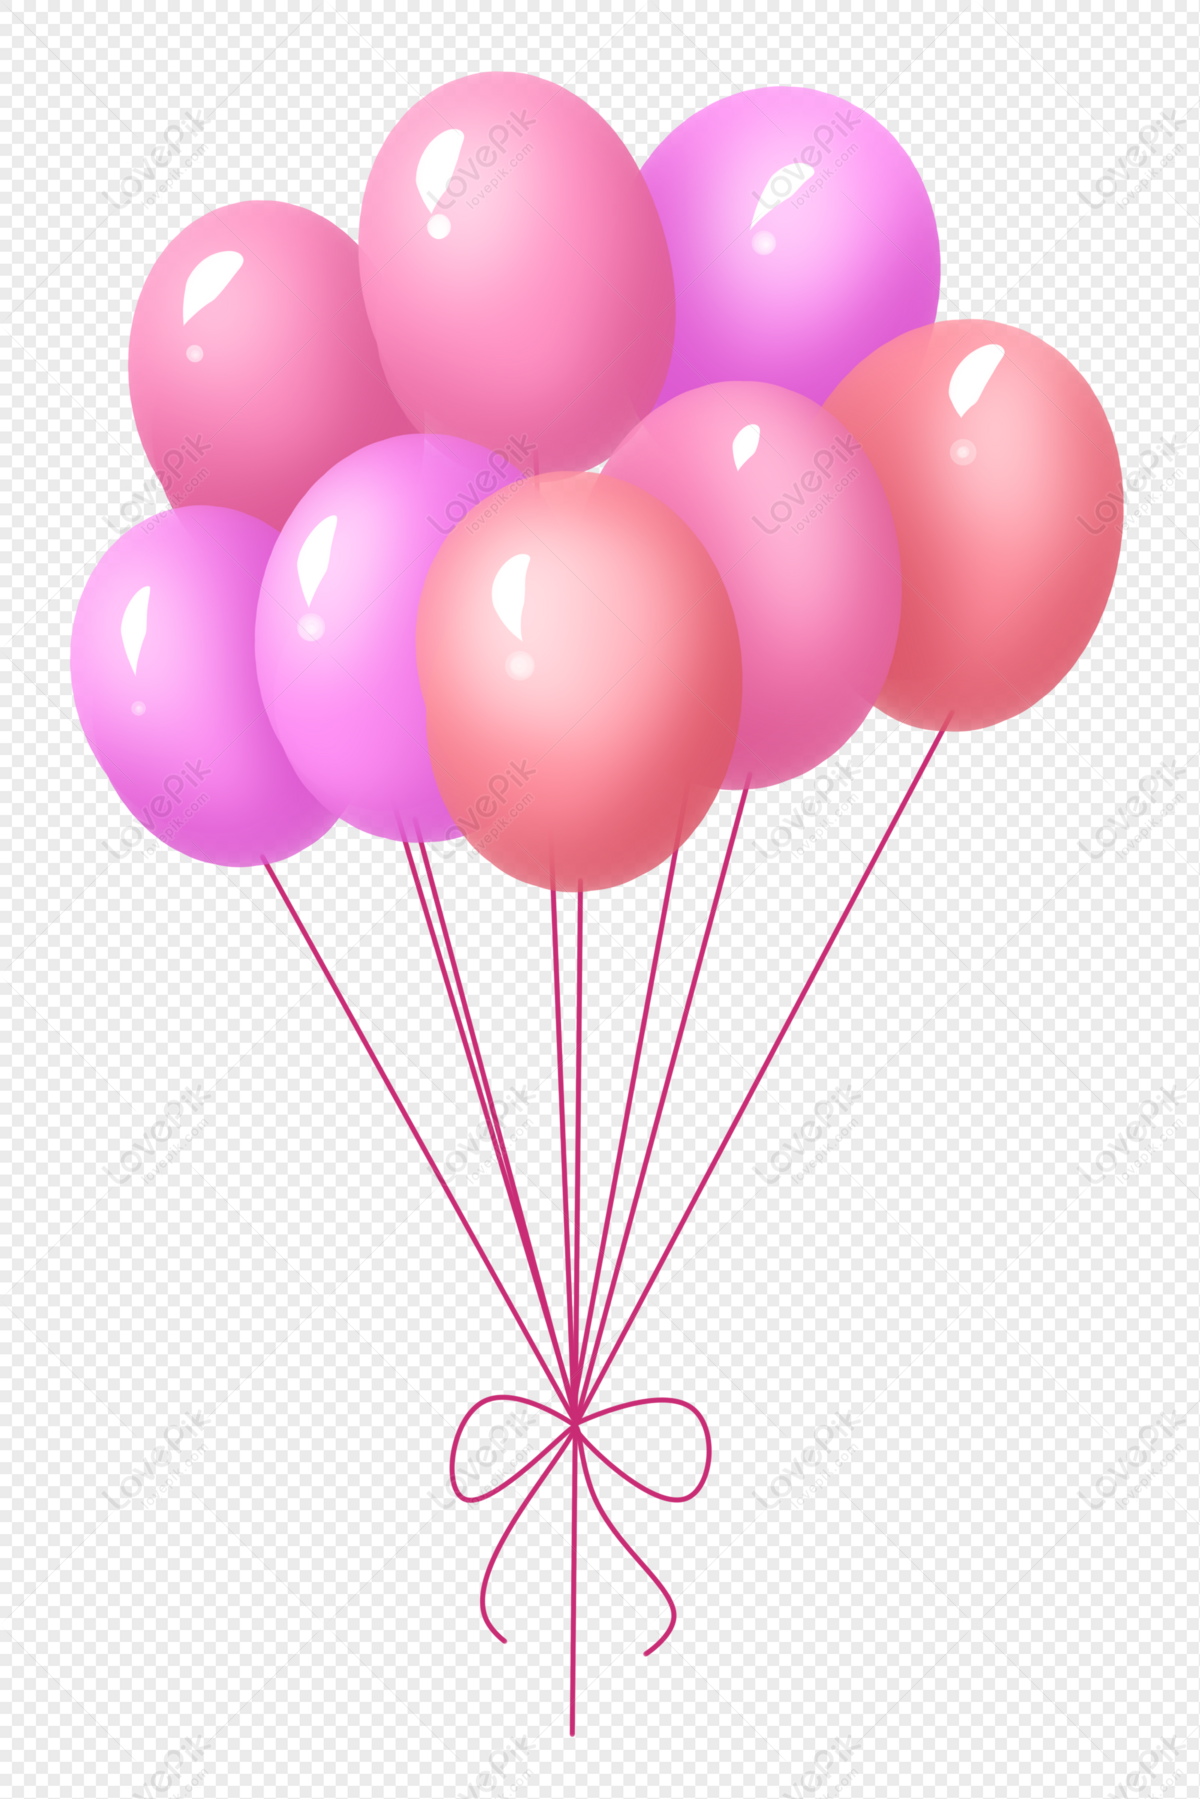 h-bor-ragad-s-alv-s-pink-balloons-png-jogosults-gi-jf-l-munkan-lk-li